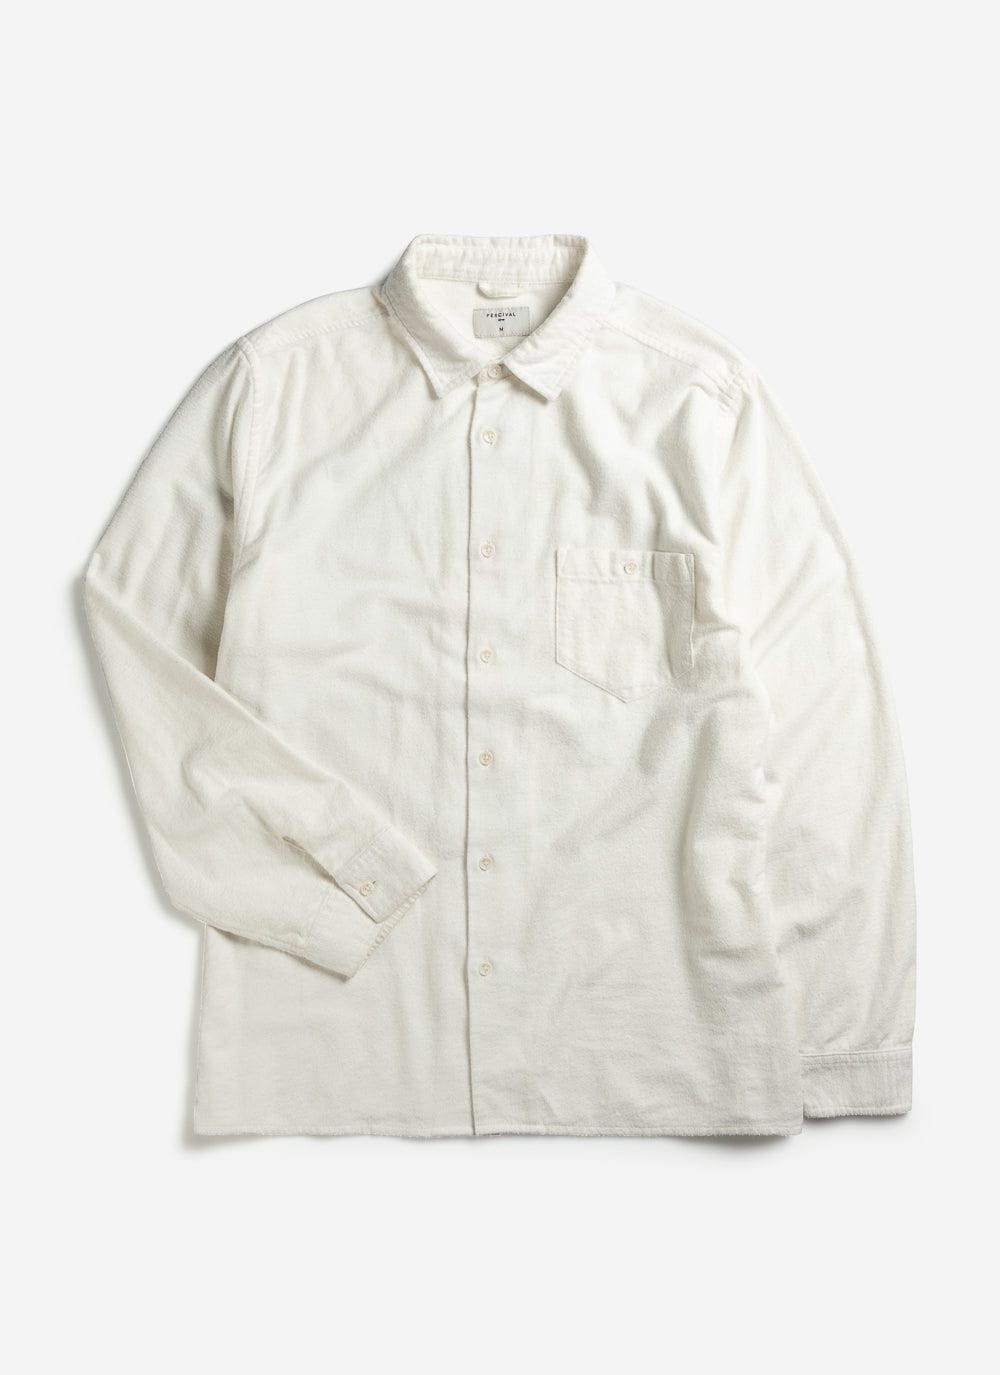 Men's Shirt | Brushed Cotton | Cream & Percival Menswear